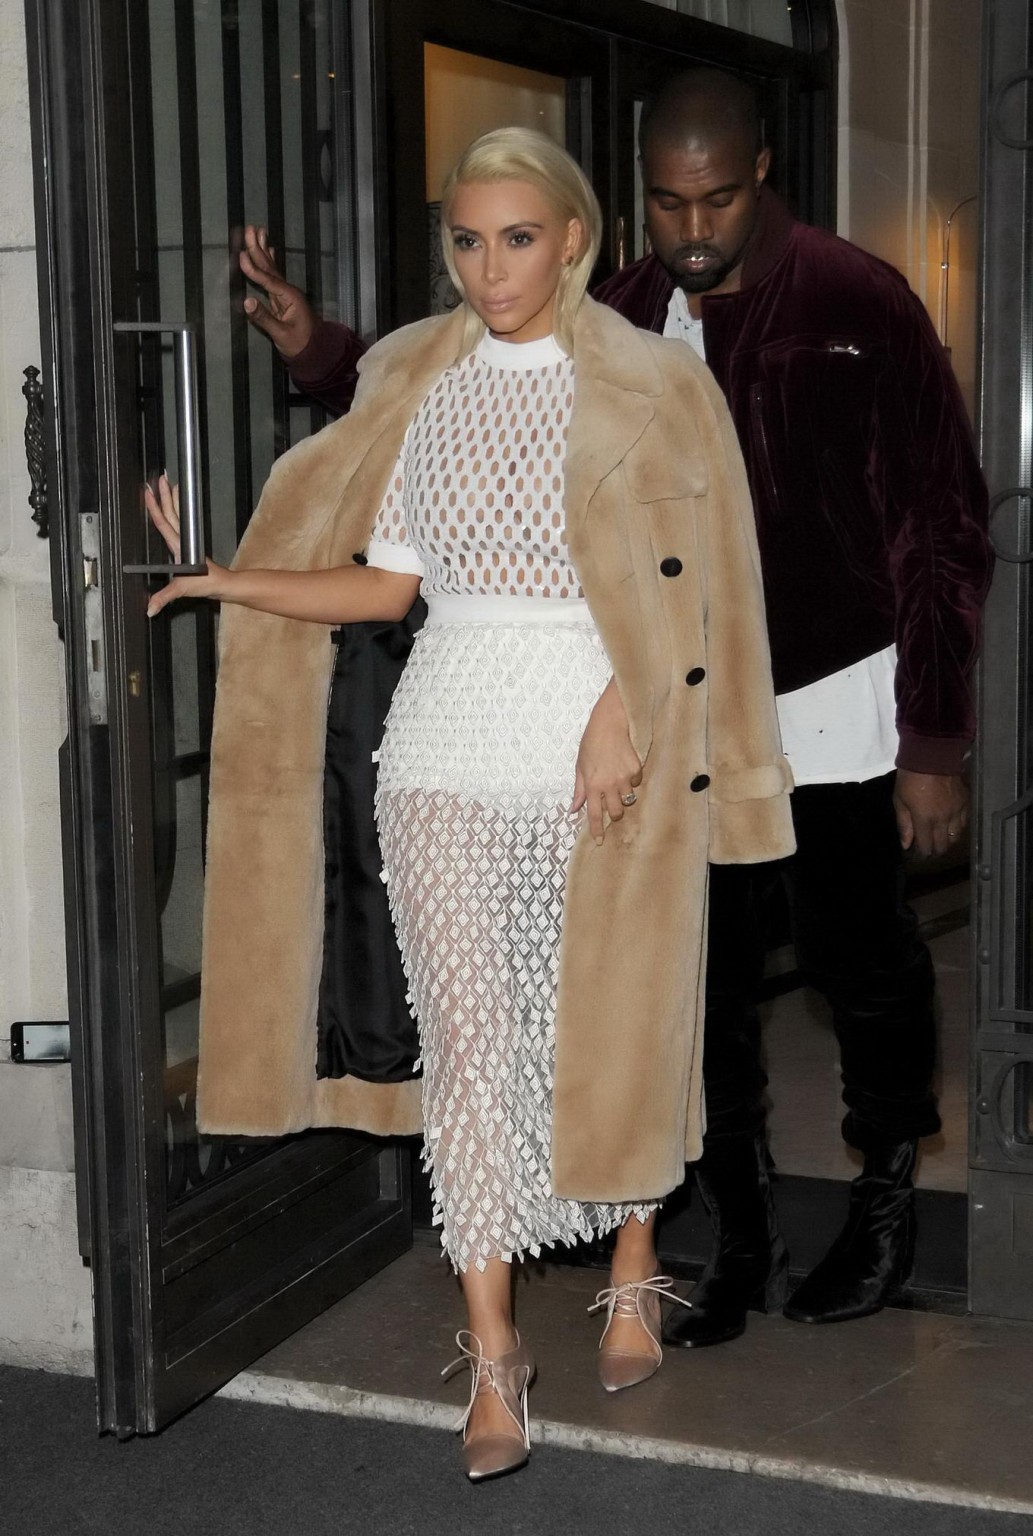 Kim Kardashian in a white mesh dress leaving her hotel in Paris